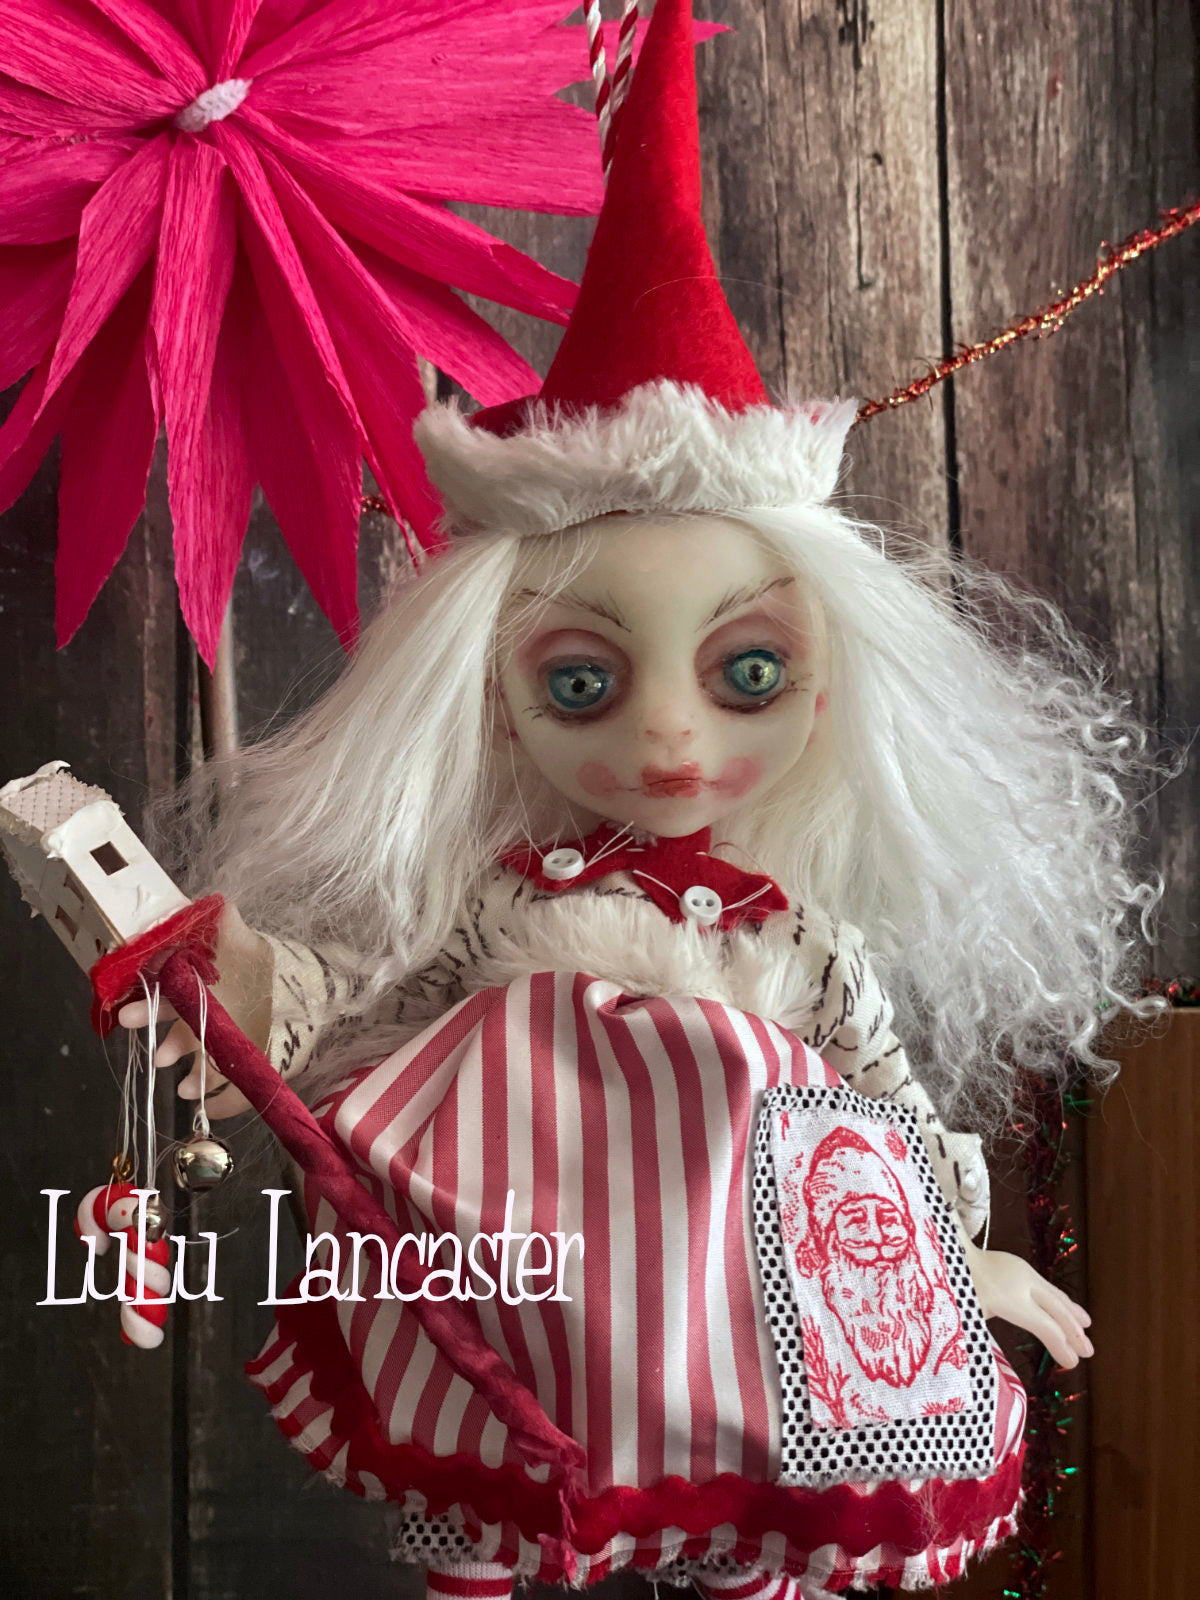 Pieni Mini hanging Christmas Elf Original LuLu Lancaster Art Doll